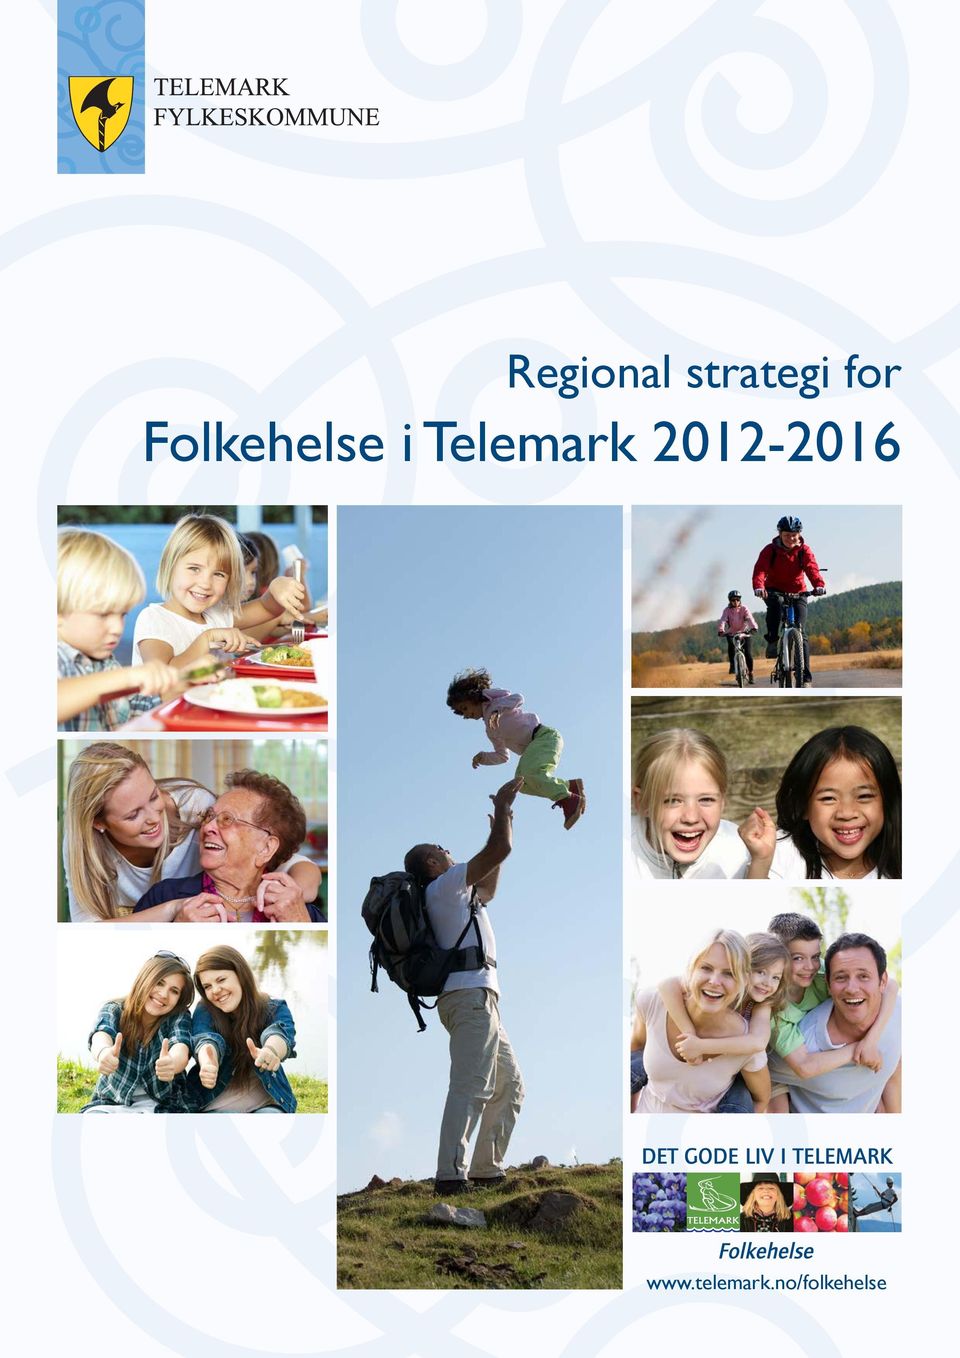 Telemark 2012-2016